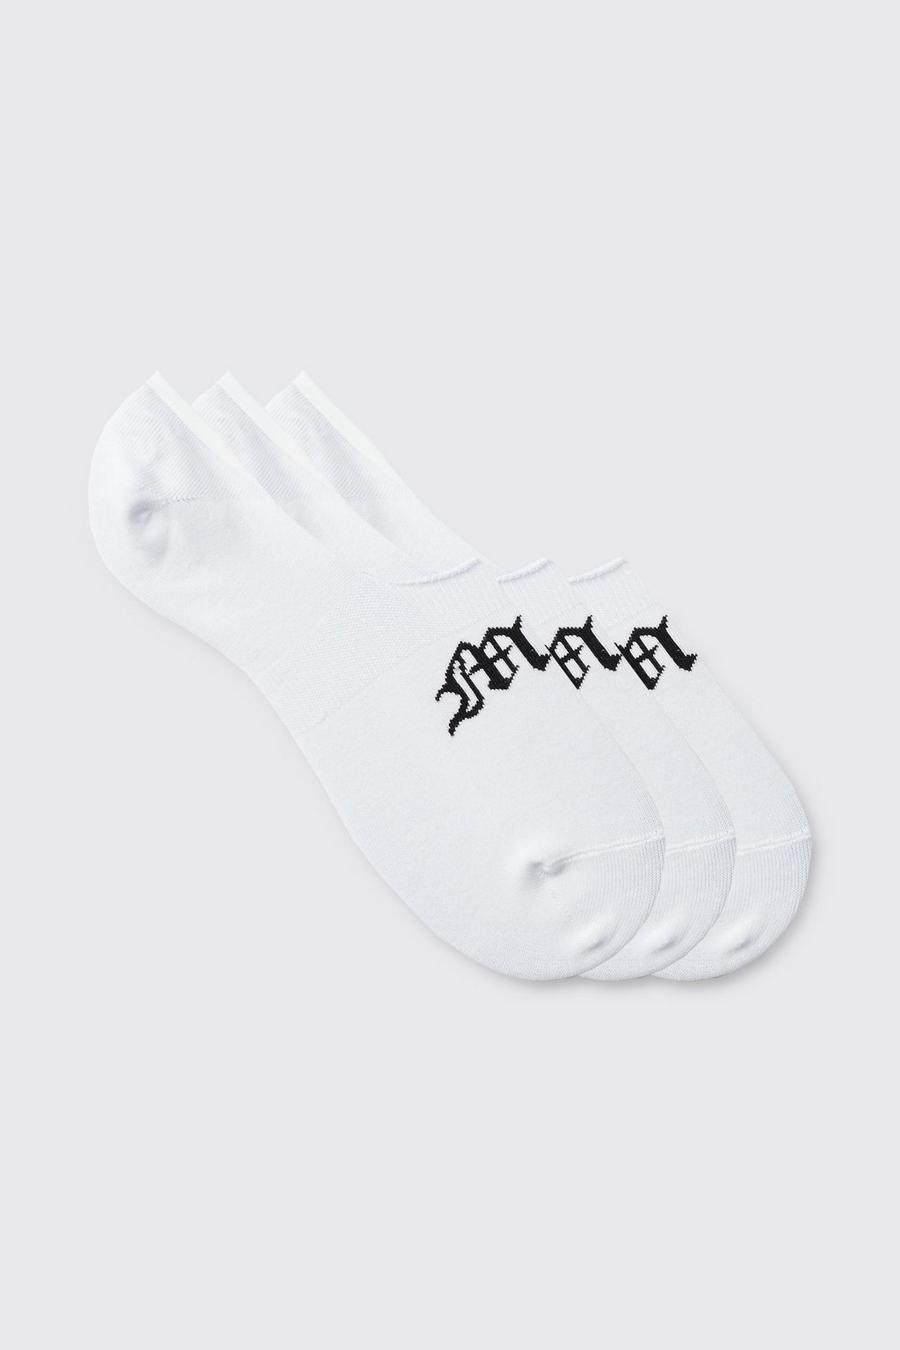 Pack de 3 pares de calcetines invisibles con letras MAN góticas, White